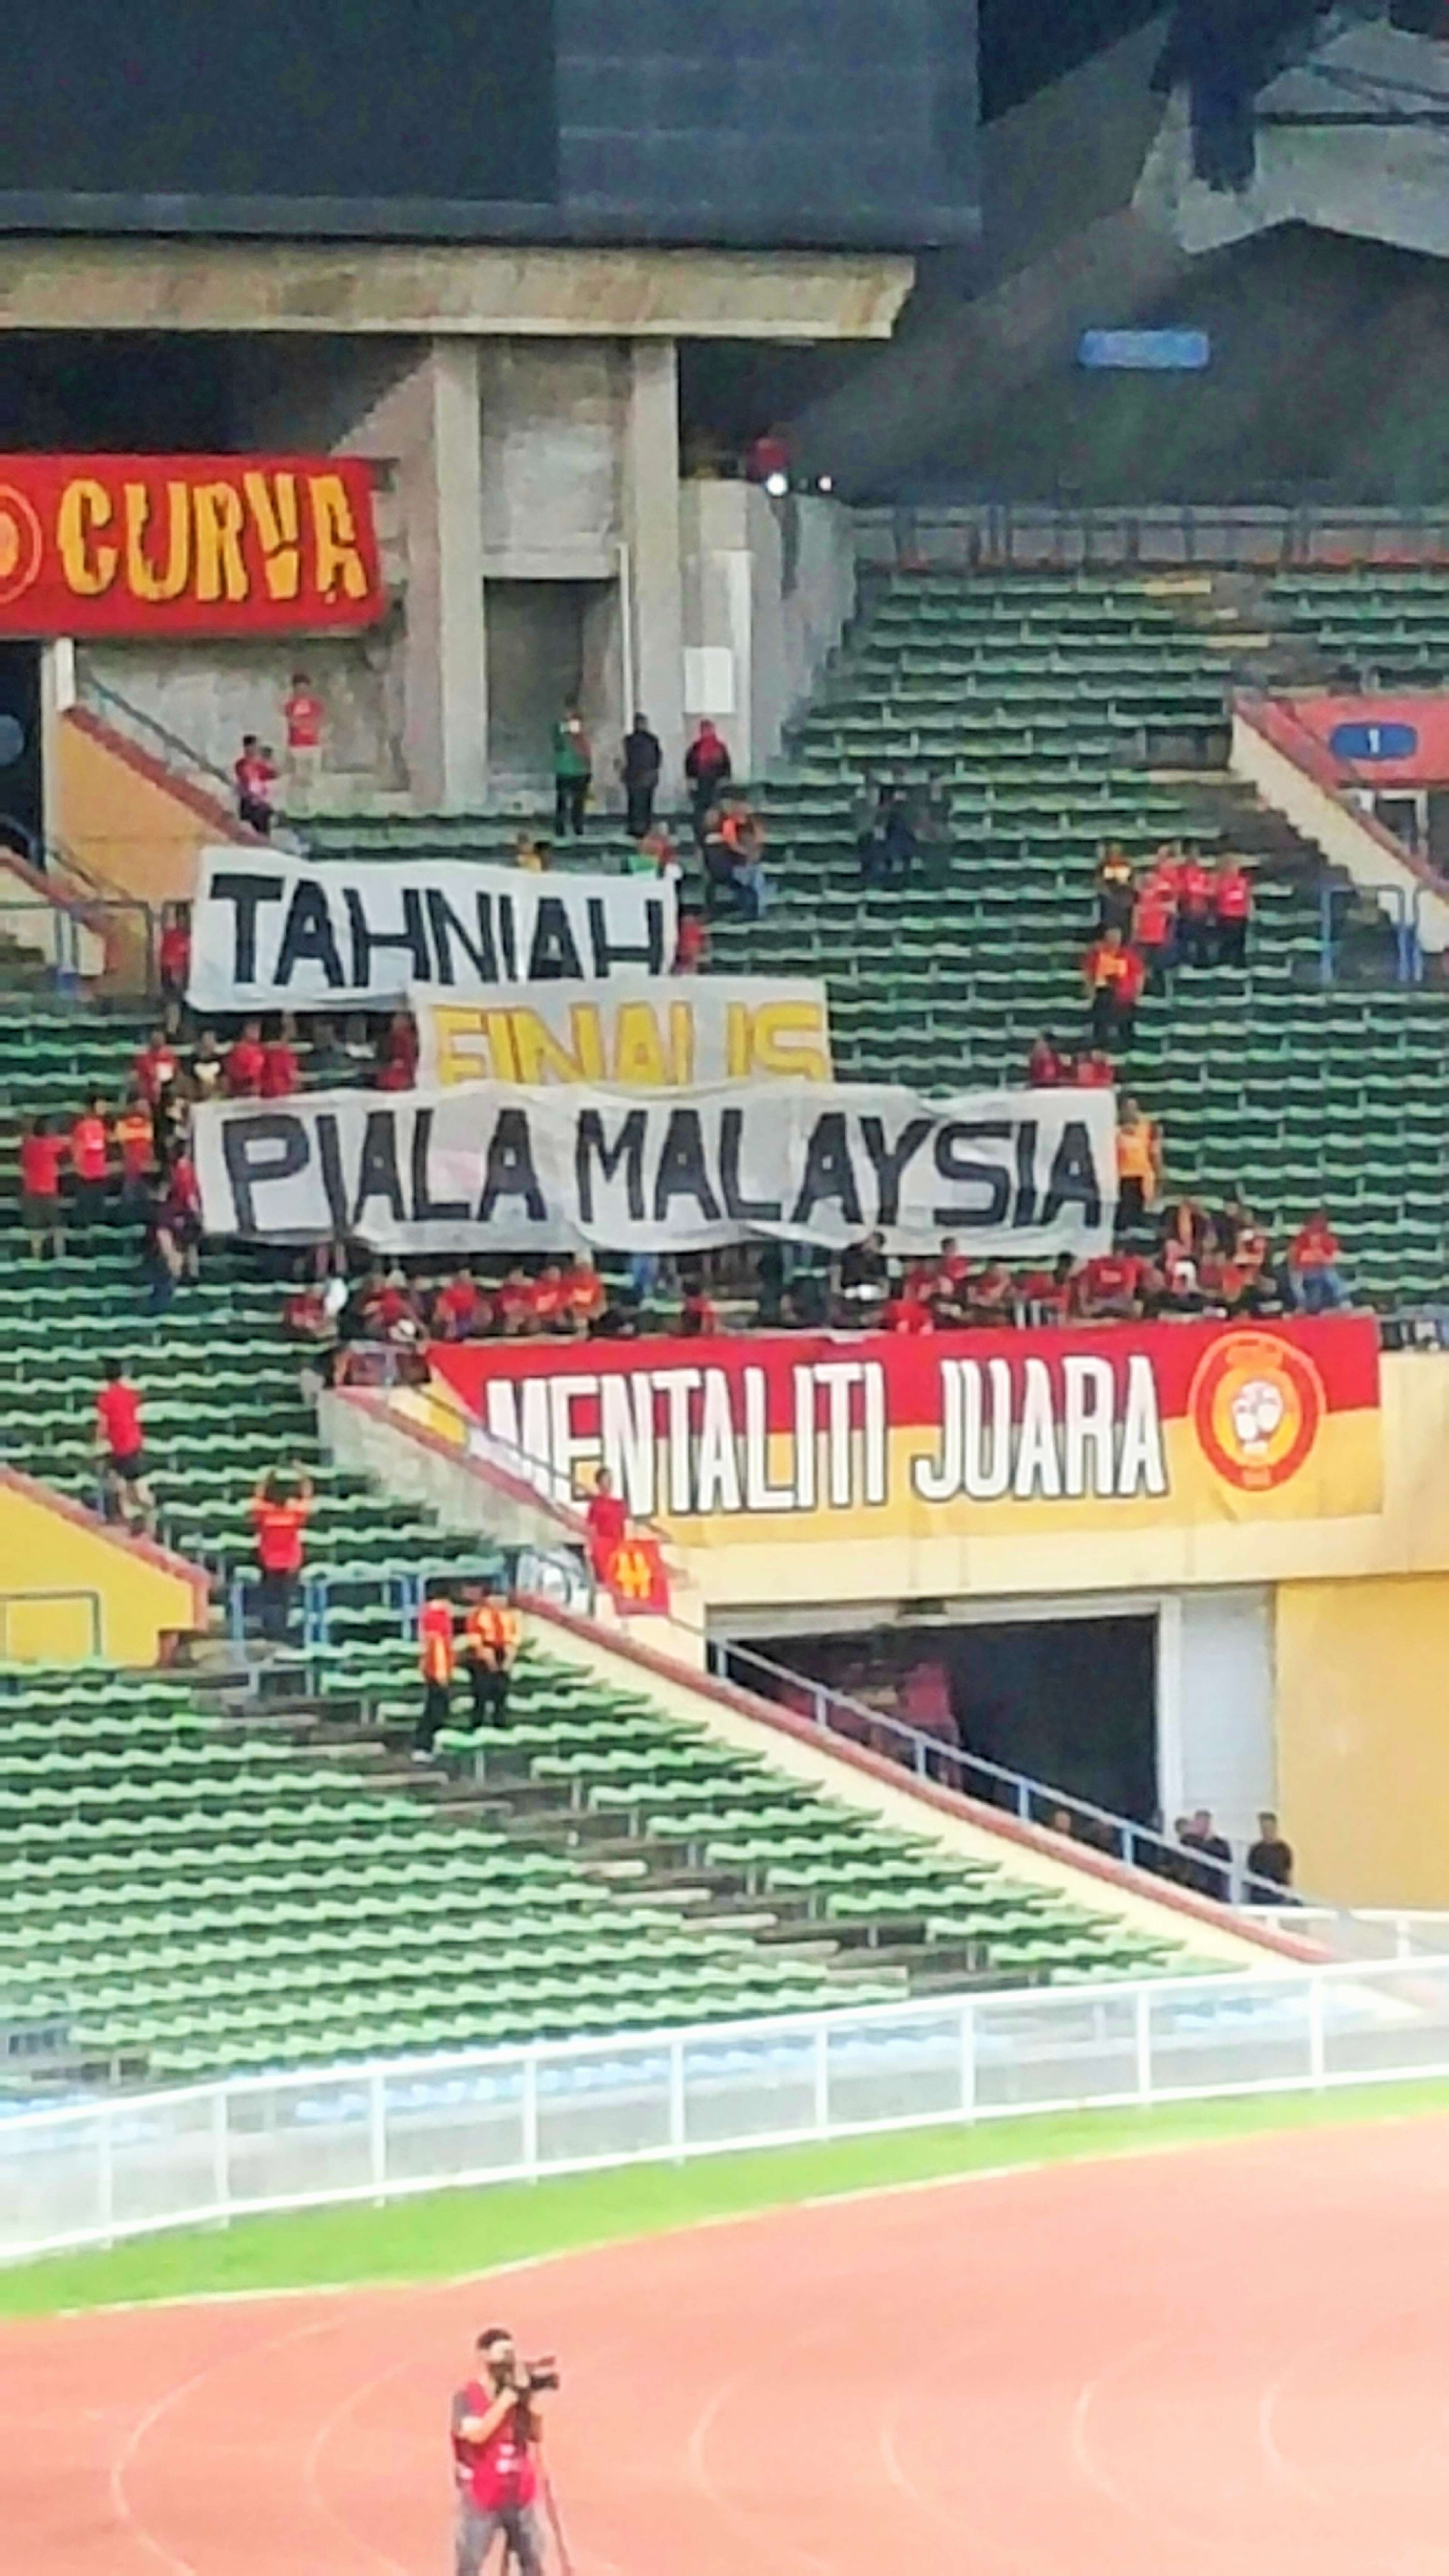 Selangor fans banner, 25062019